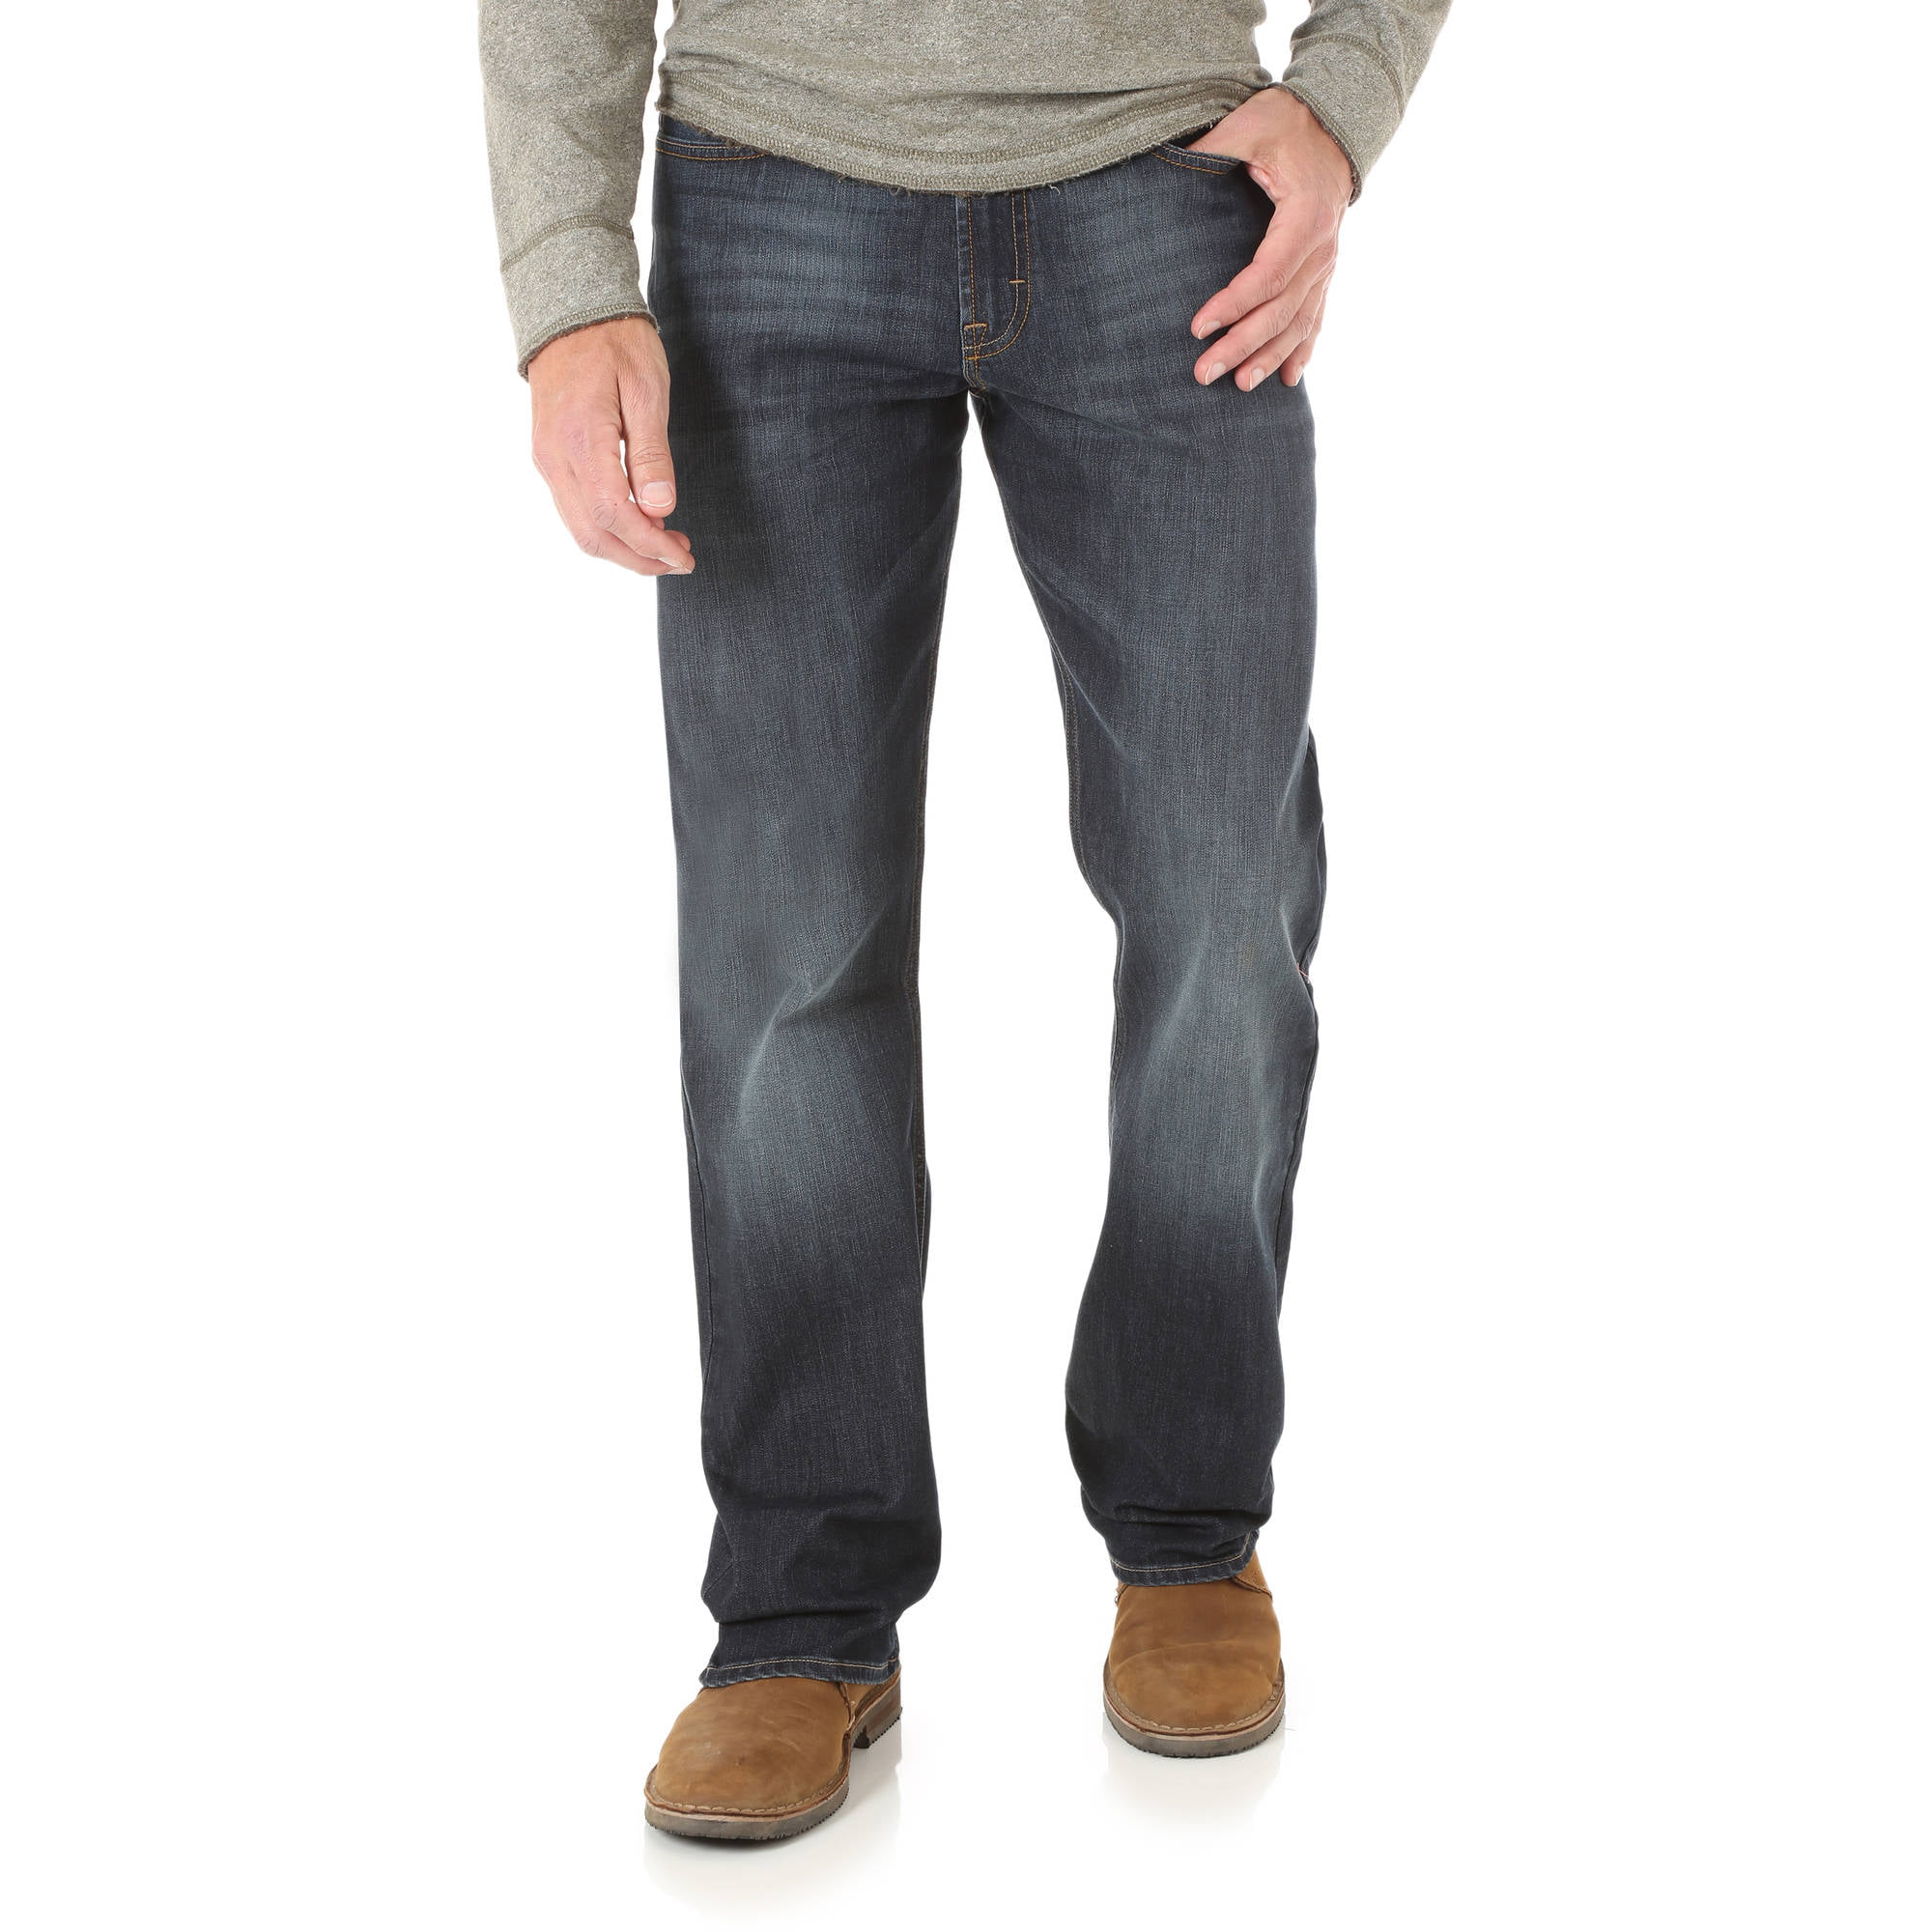 wrangler bootcut jeans walmart